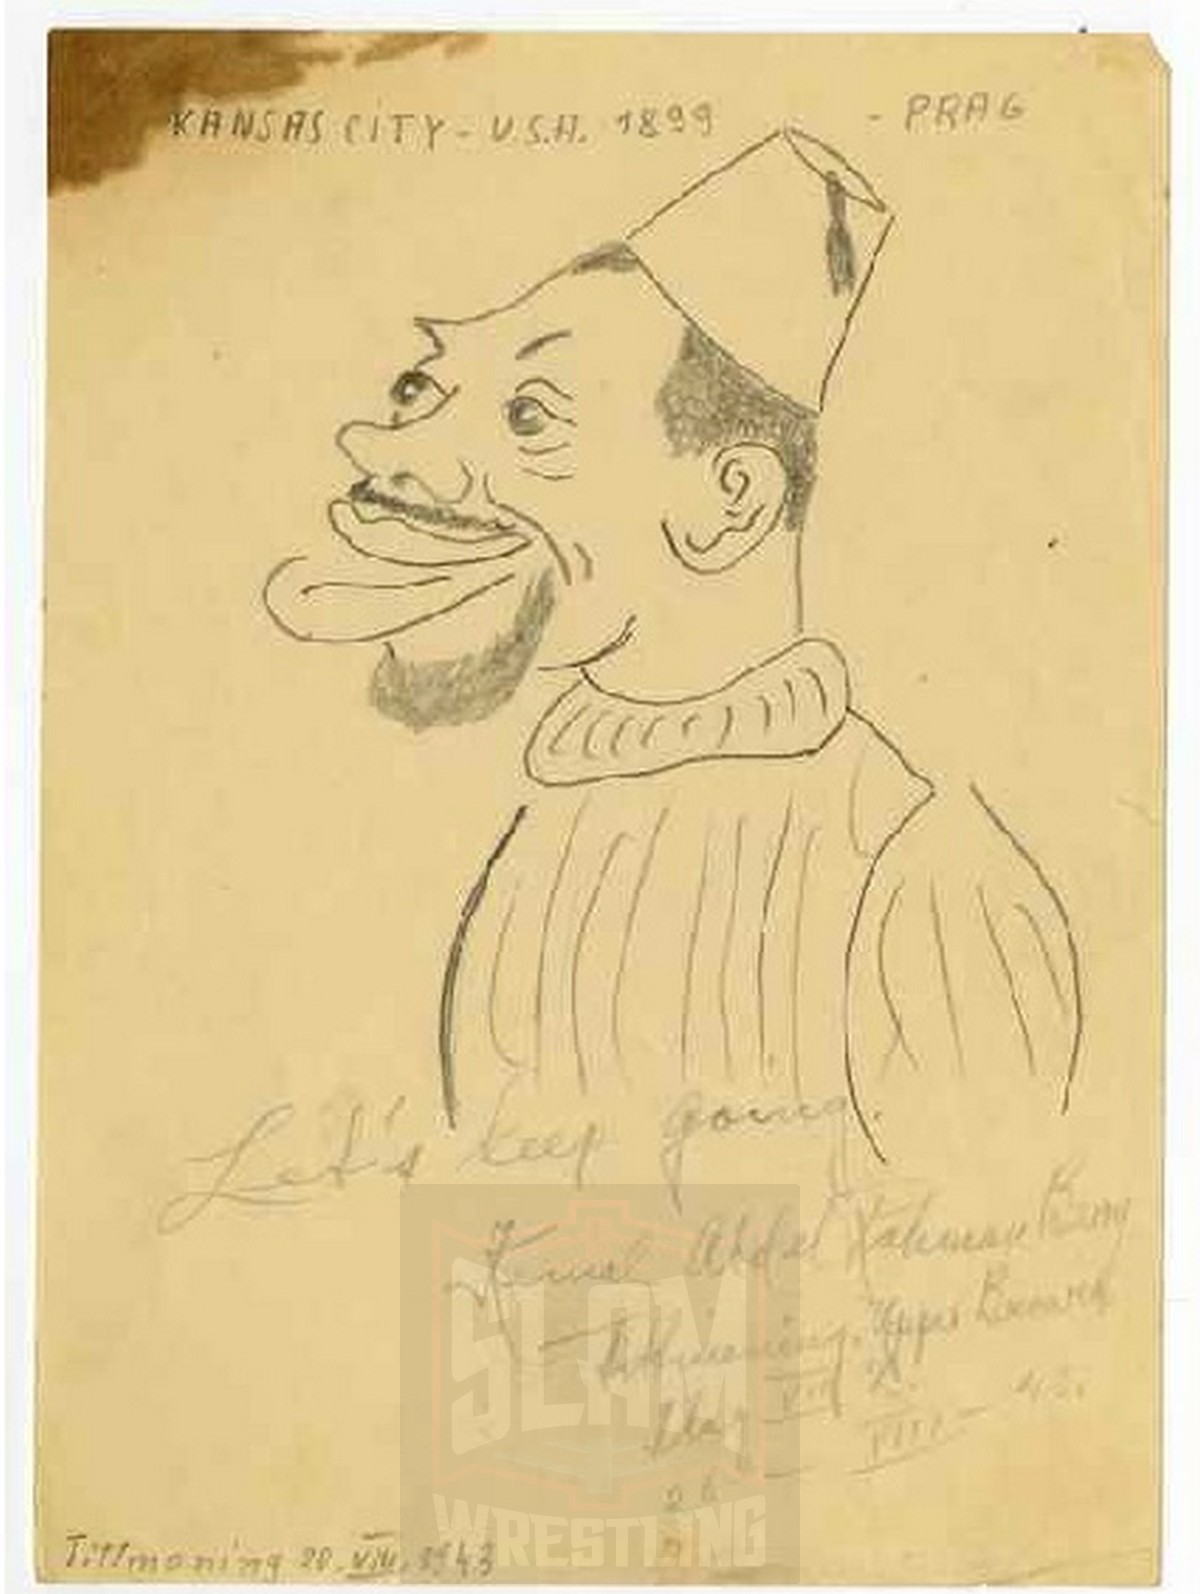 Drawing of Reginald Siki by Max Brandel